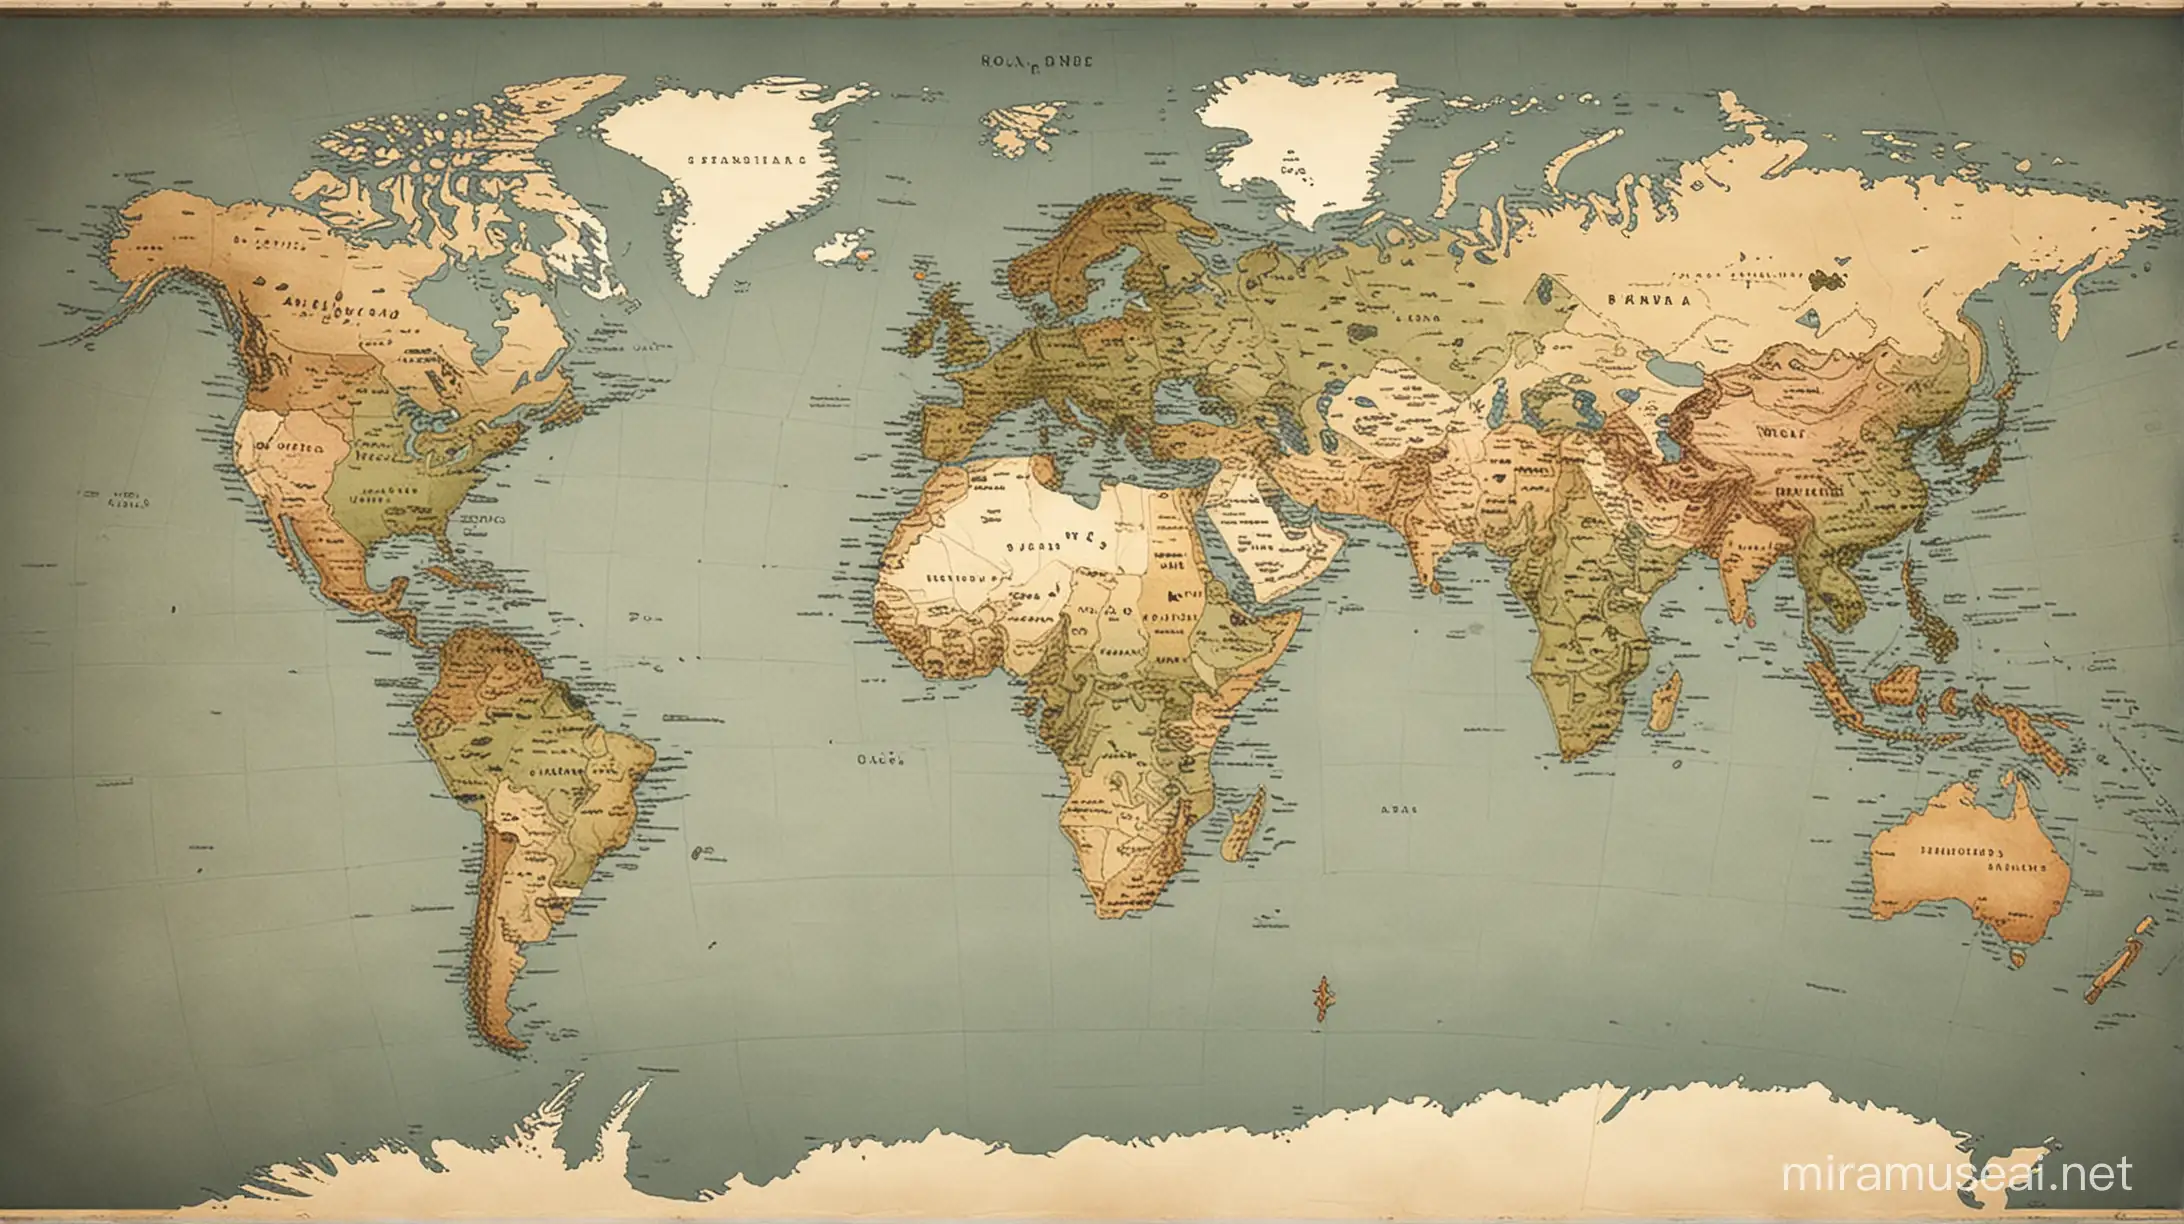 Peta dunia yang terdiri dari 1 benua misterius dan 4 benua lain nya 